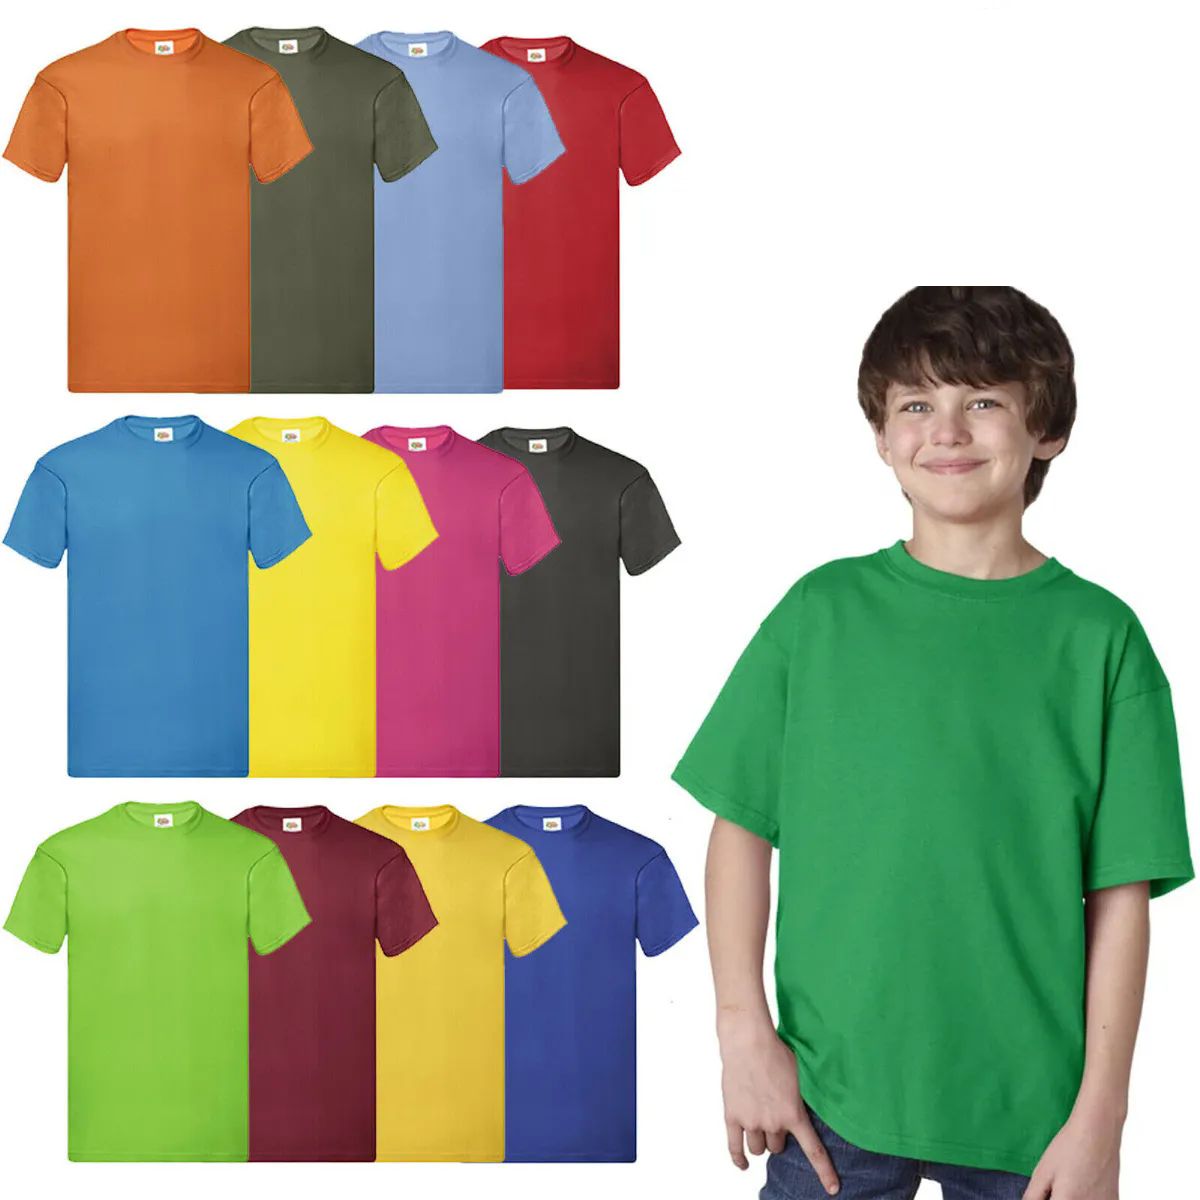 576 Wholesale Billion Hats Kids Youth Cotton Assorted Colors T Shirts Size xs